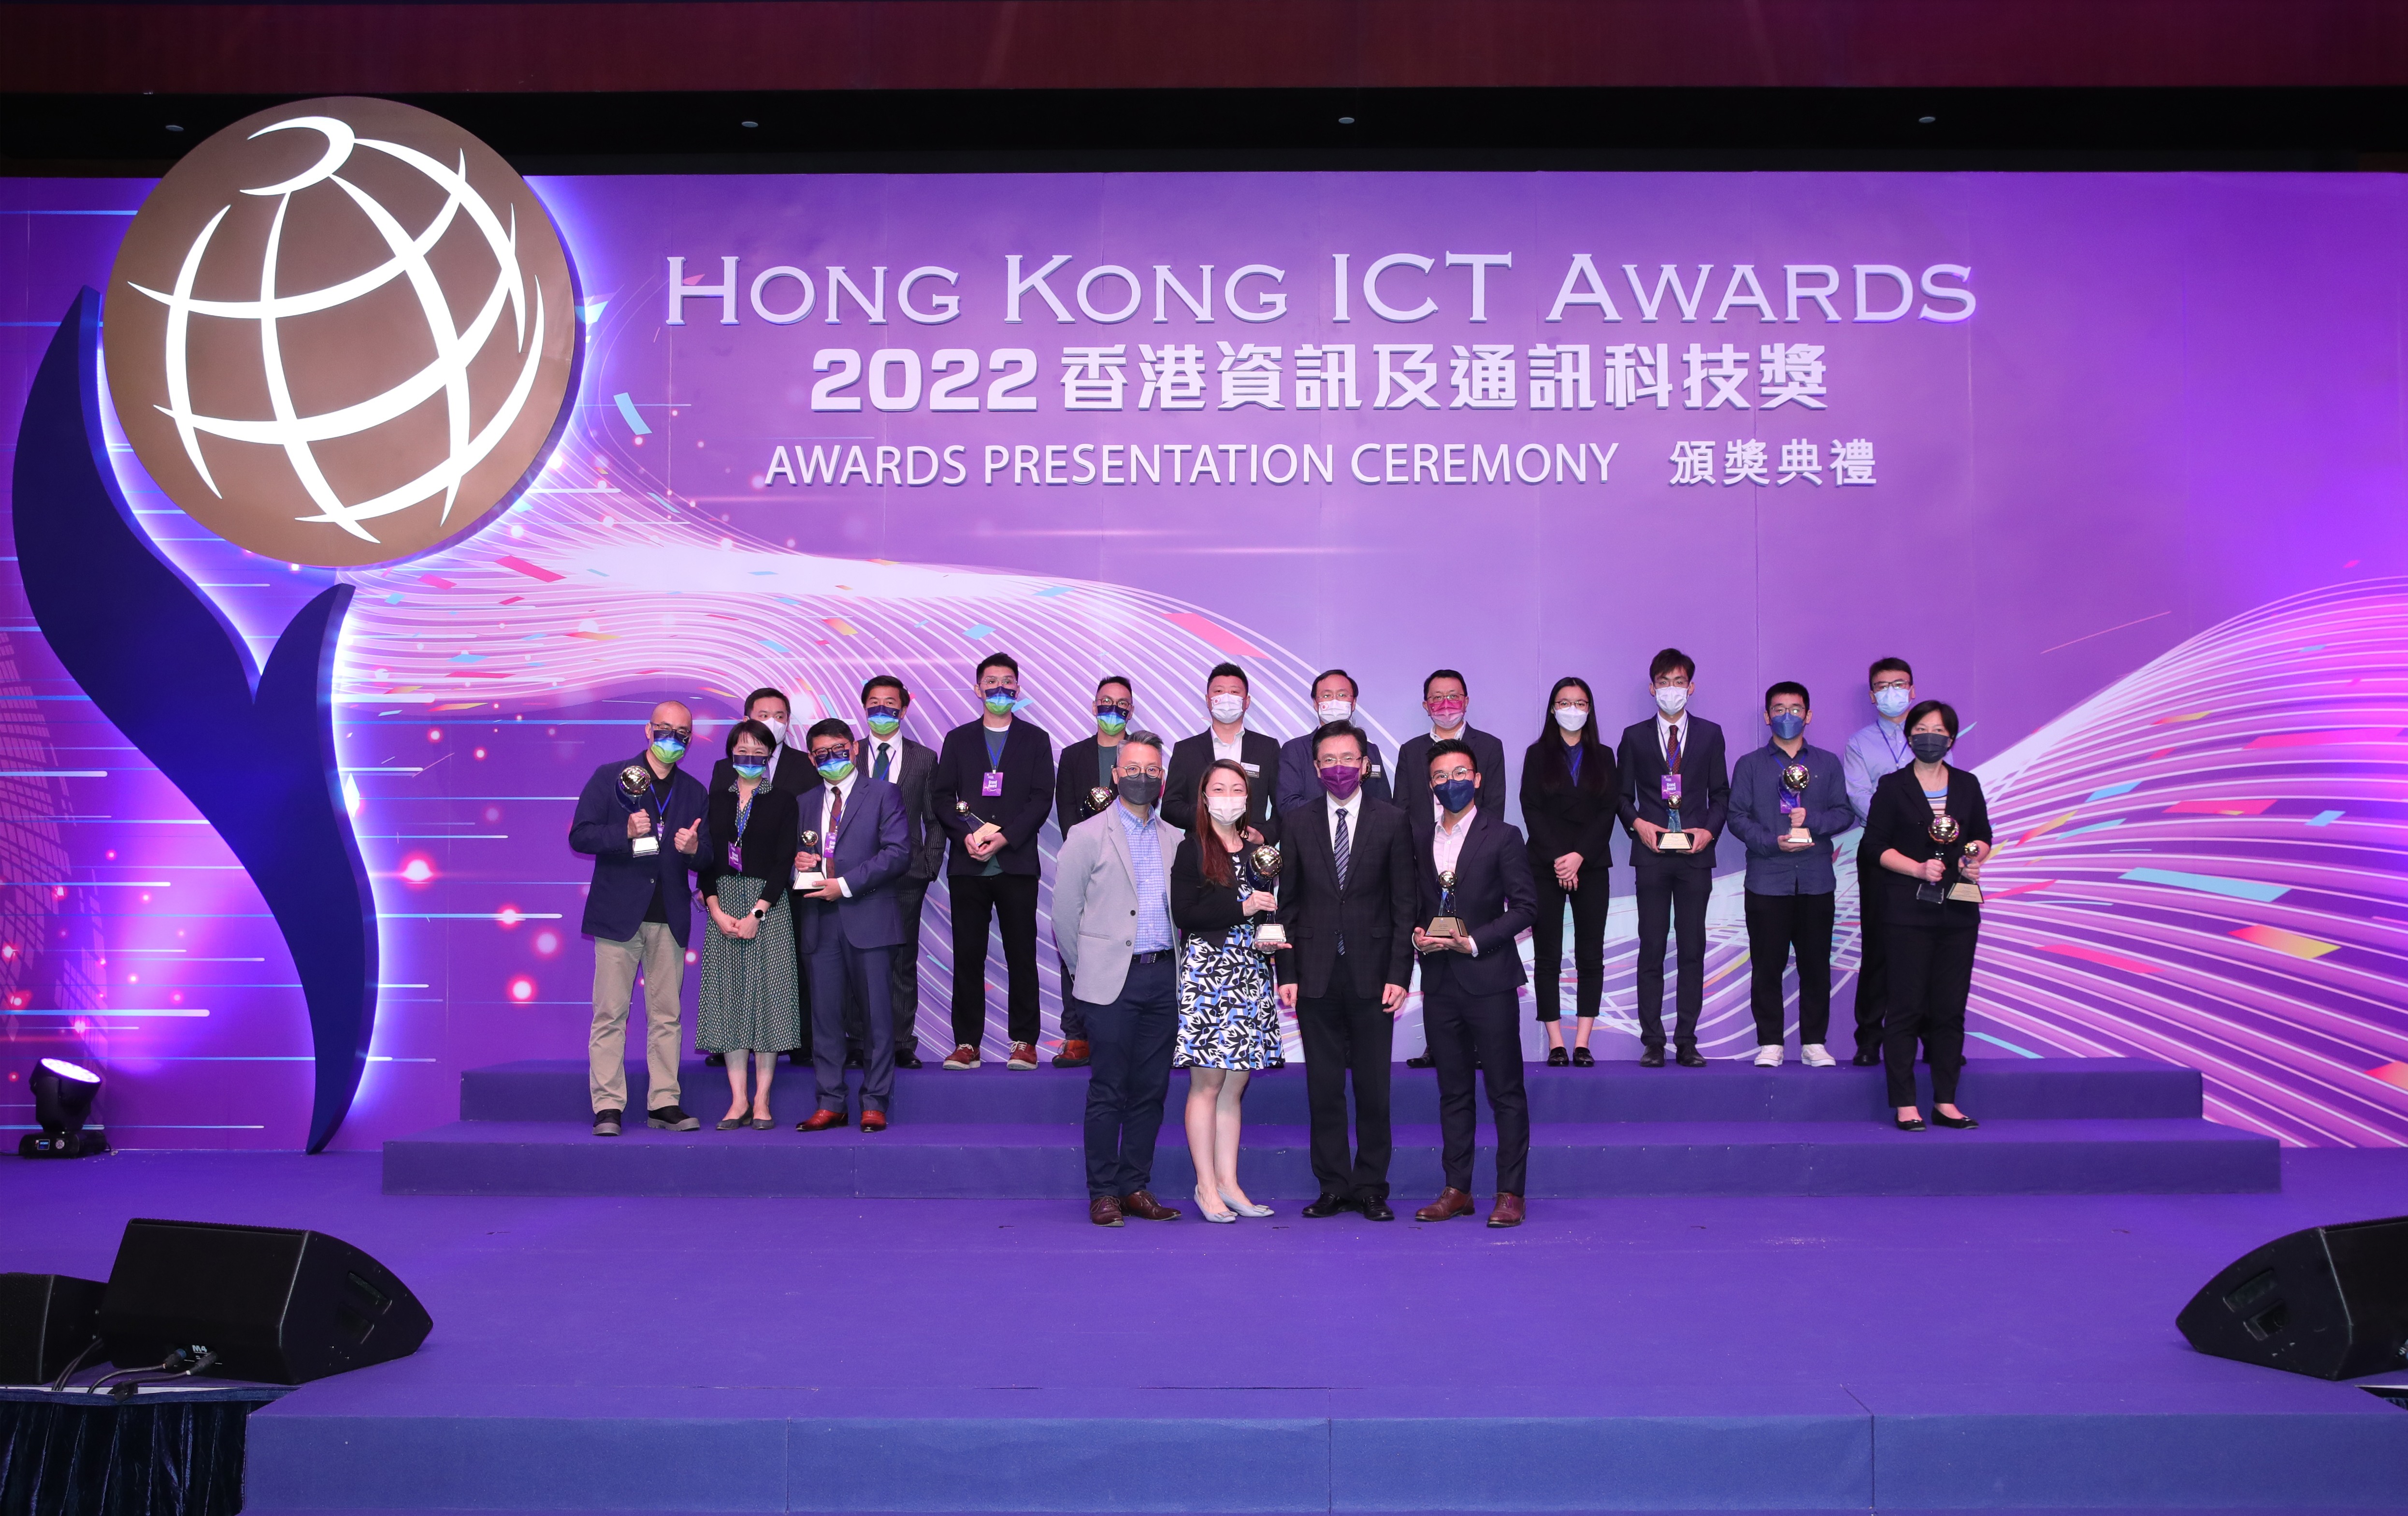 Hong Kong ICT Awards 2022 Smart Mobility Grand Award Winner